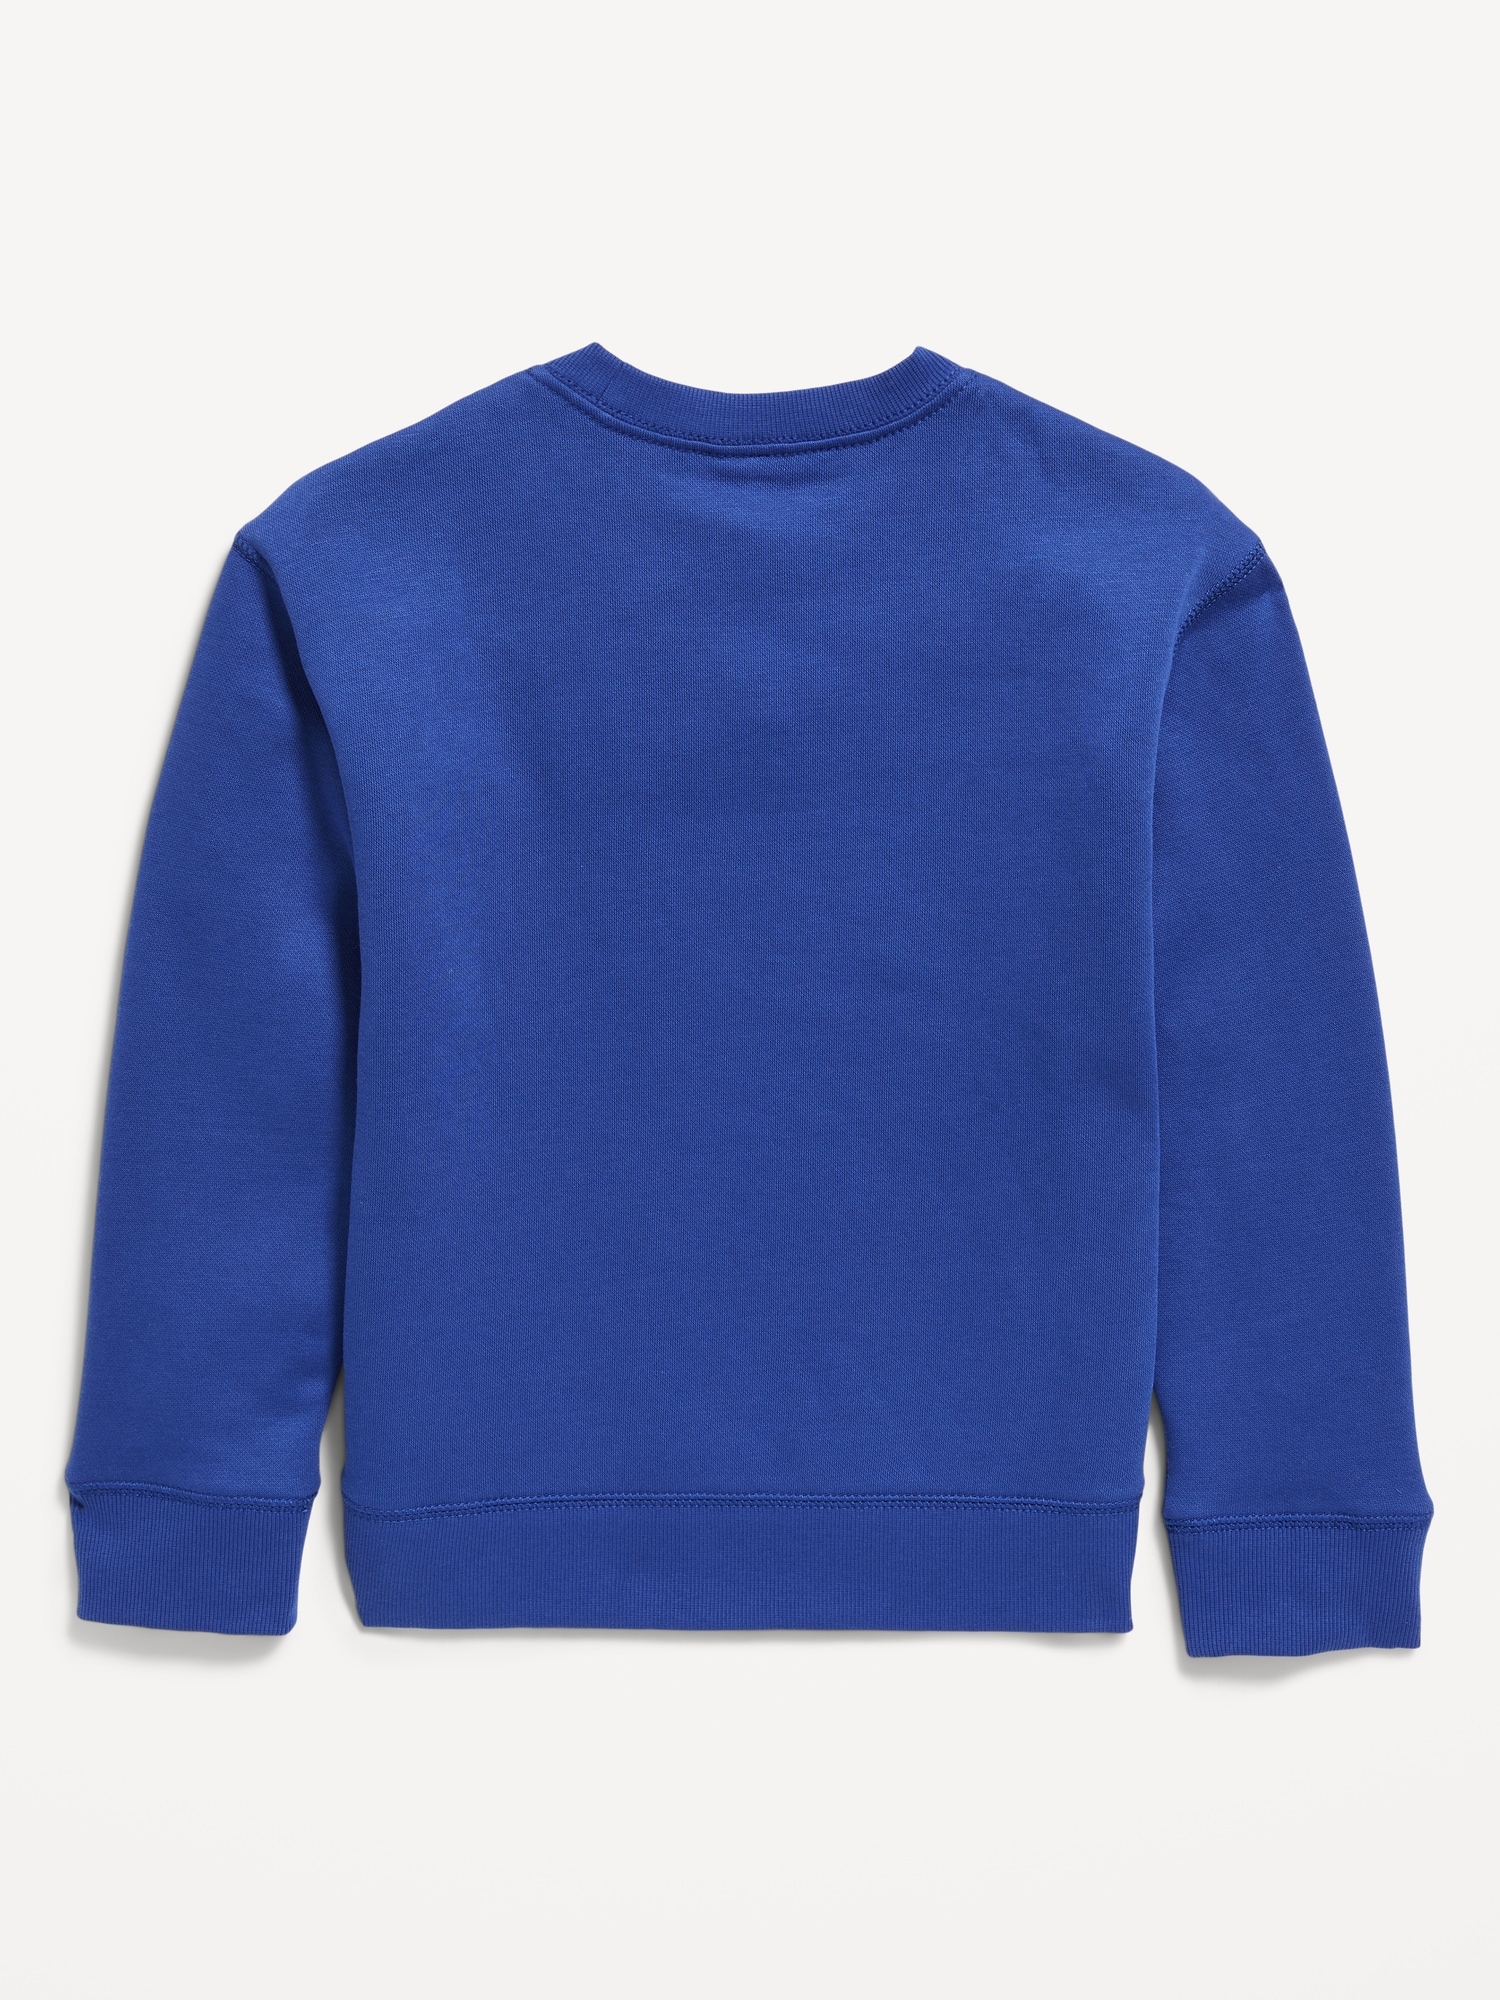 Long-Sleeve Crew-Neck Sweatshirt for Boys | Old Navy